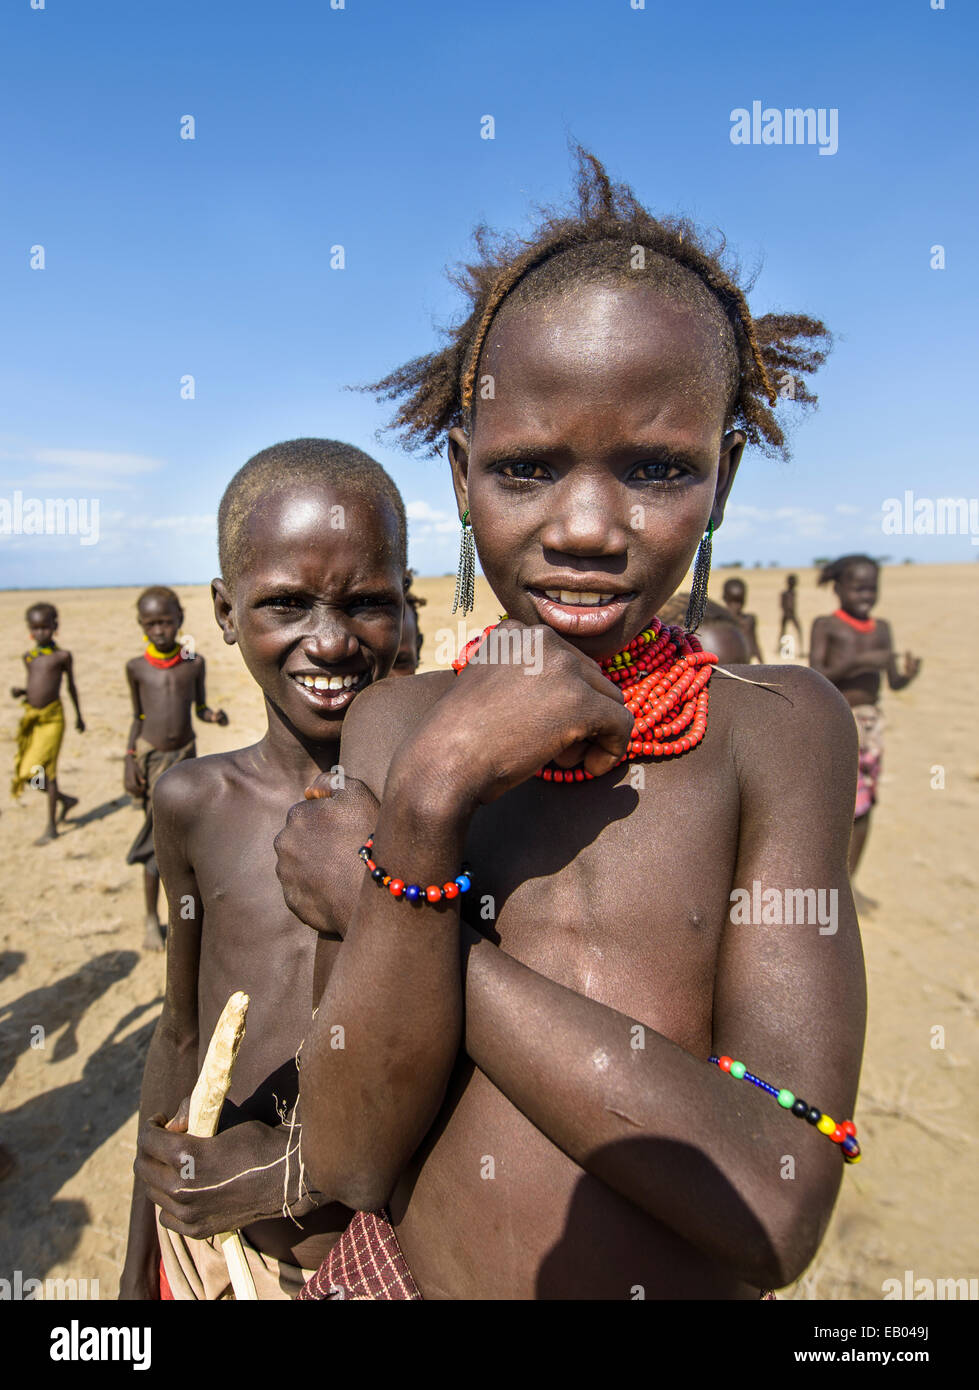 Kids of the Dassanach tribe, Kenya Stock Photo